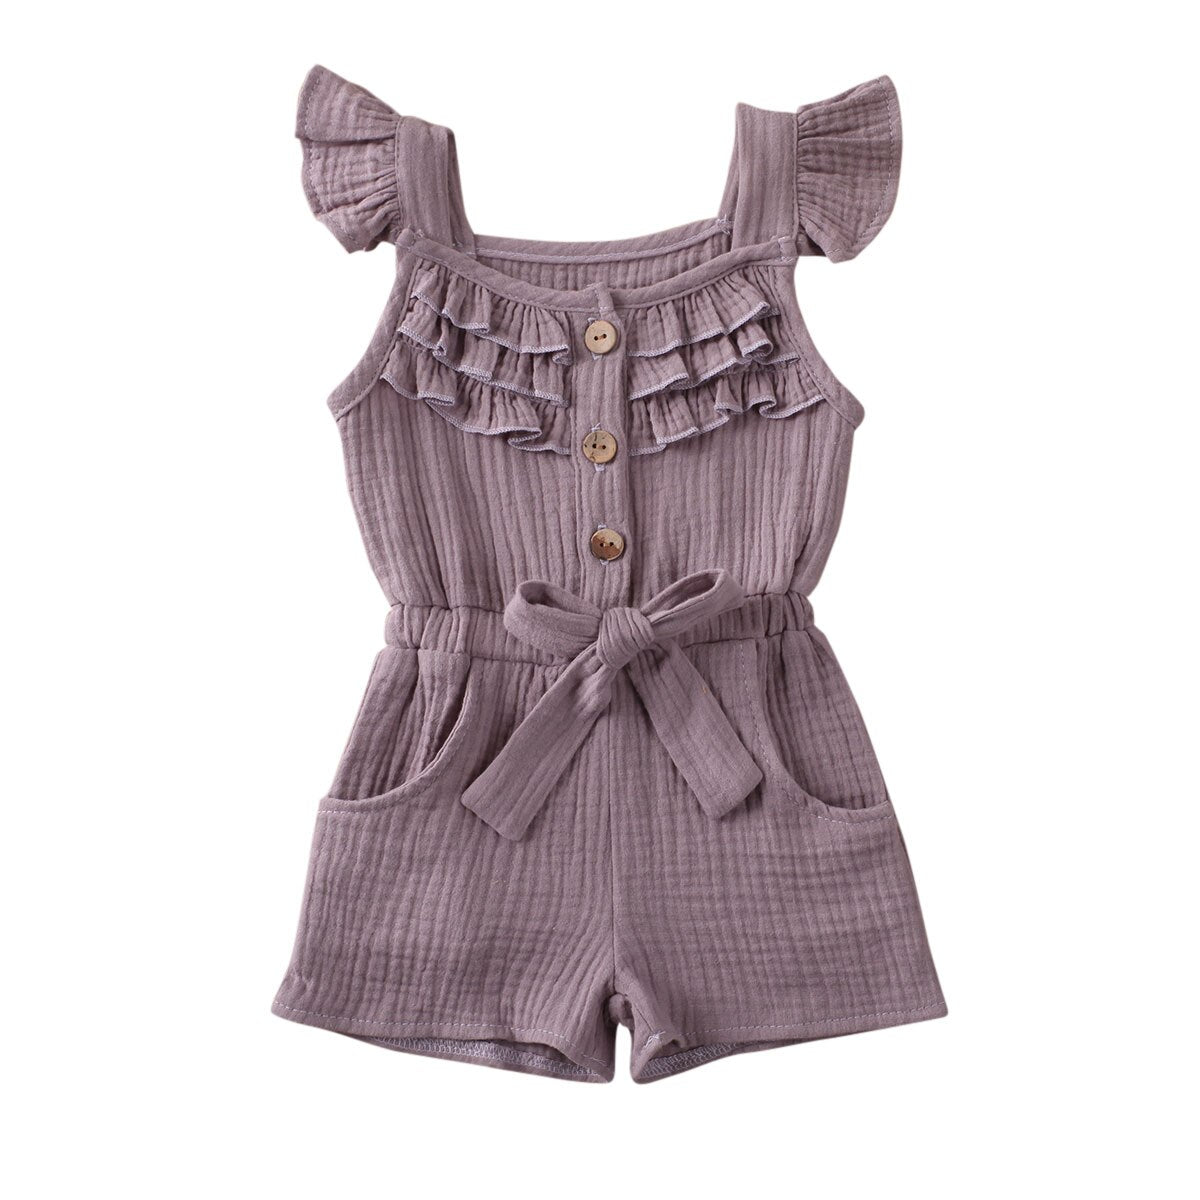 0-5T Newborn Toddler Baby Boy Girls Romper Bodysuit Sunsuit Outfit Clothes Playsuit